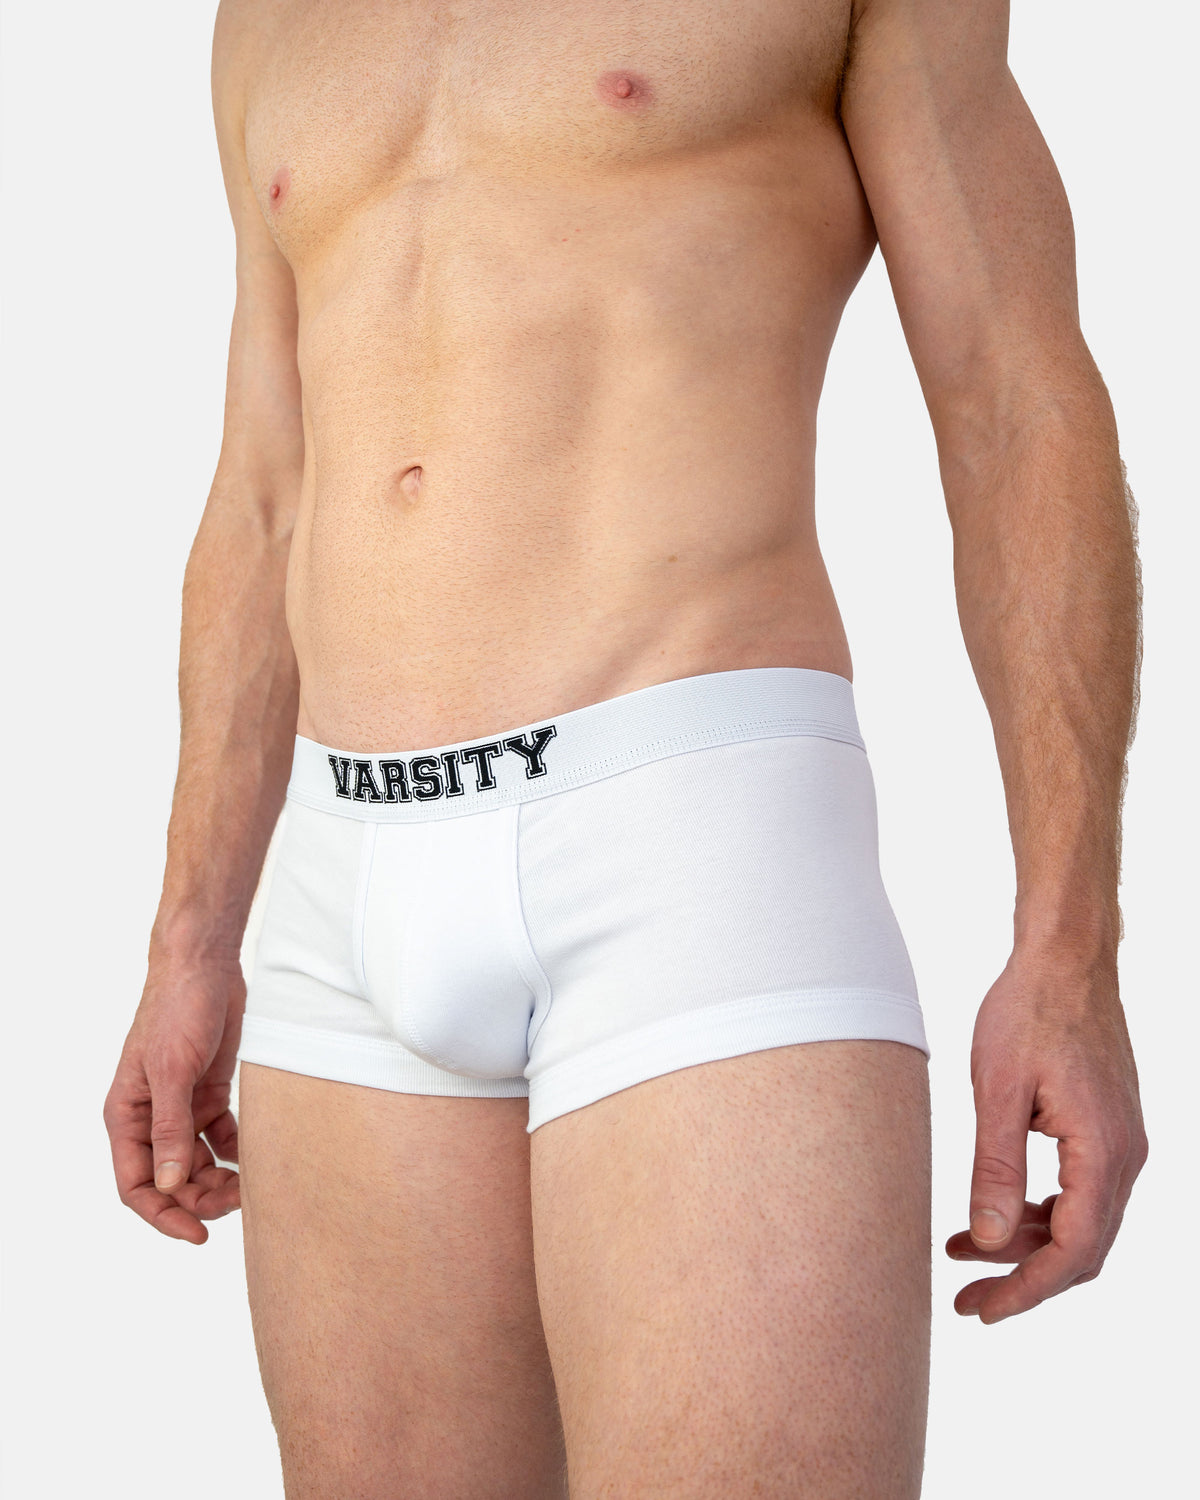 Men's Underwear Jockstraps, Online Australia